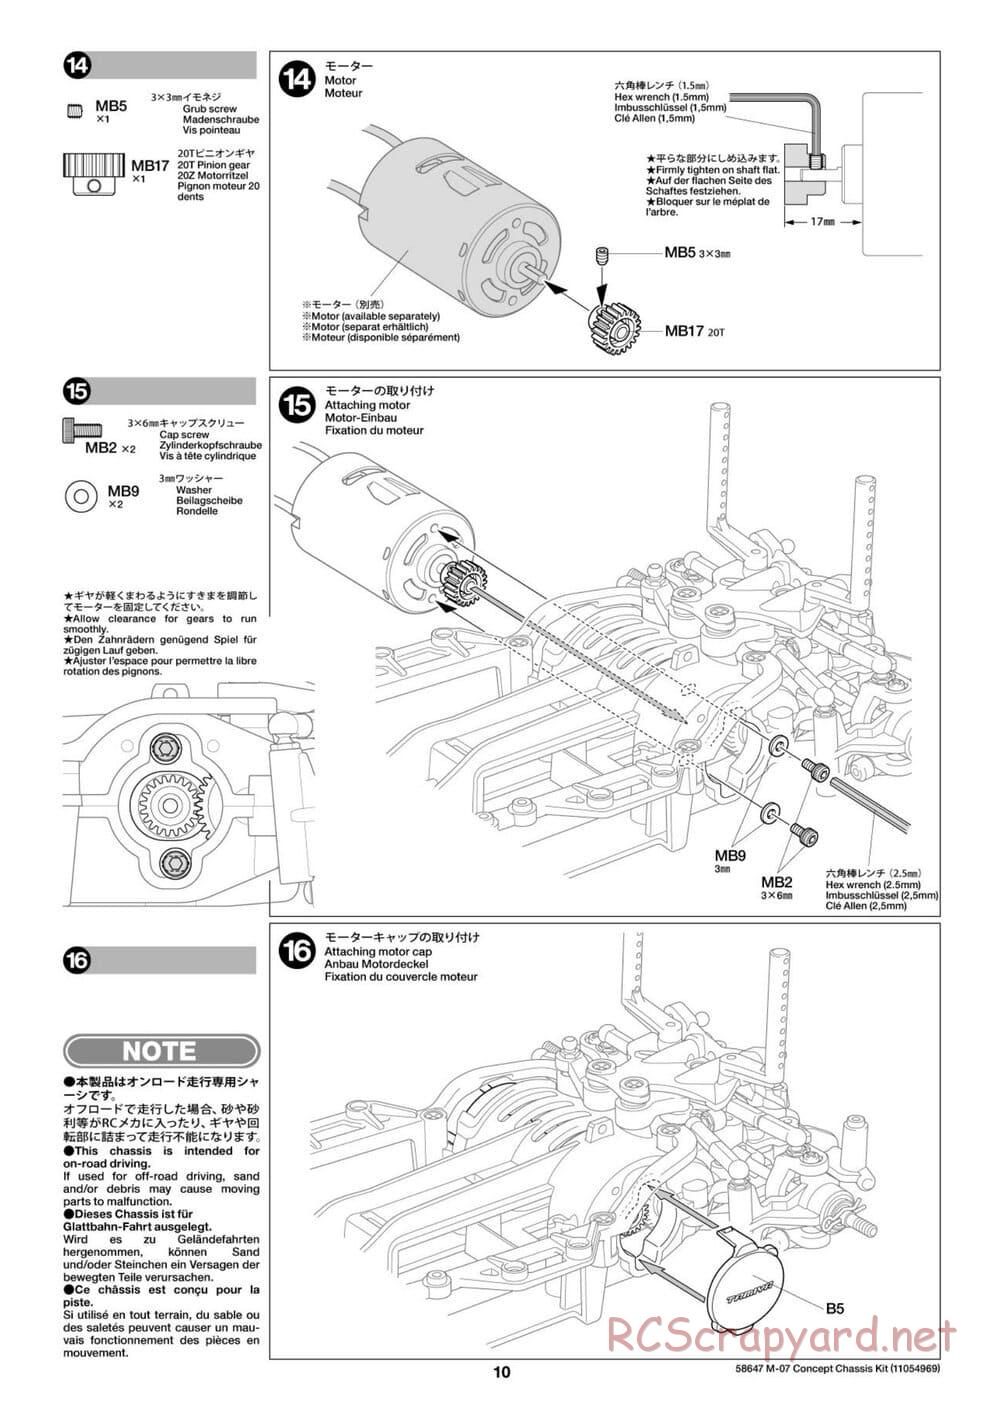 Tamiya - M-07 Concept Chassis - Manual - Page 10